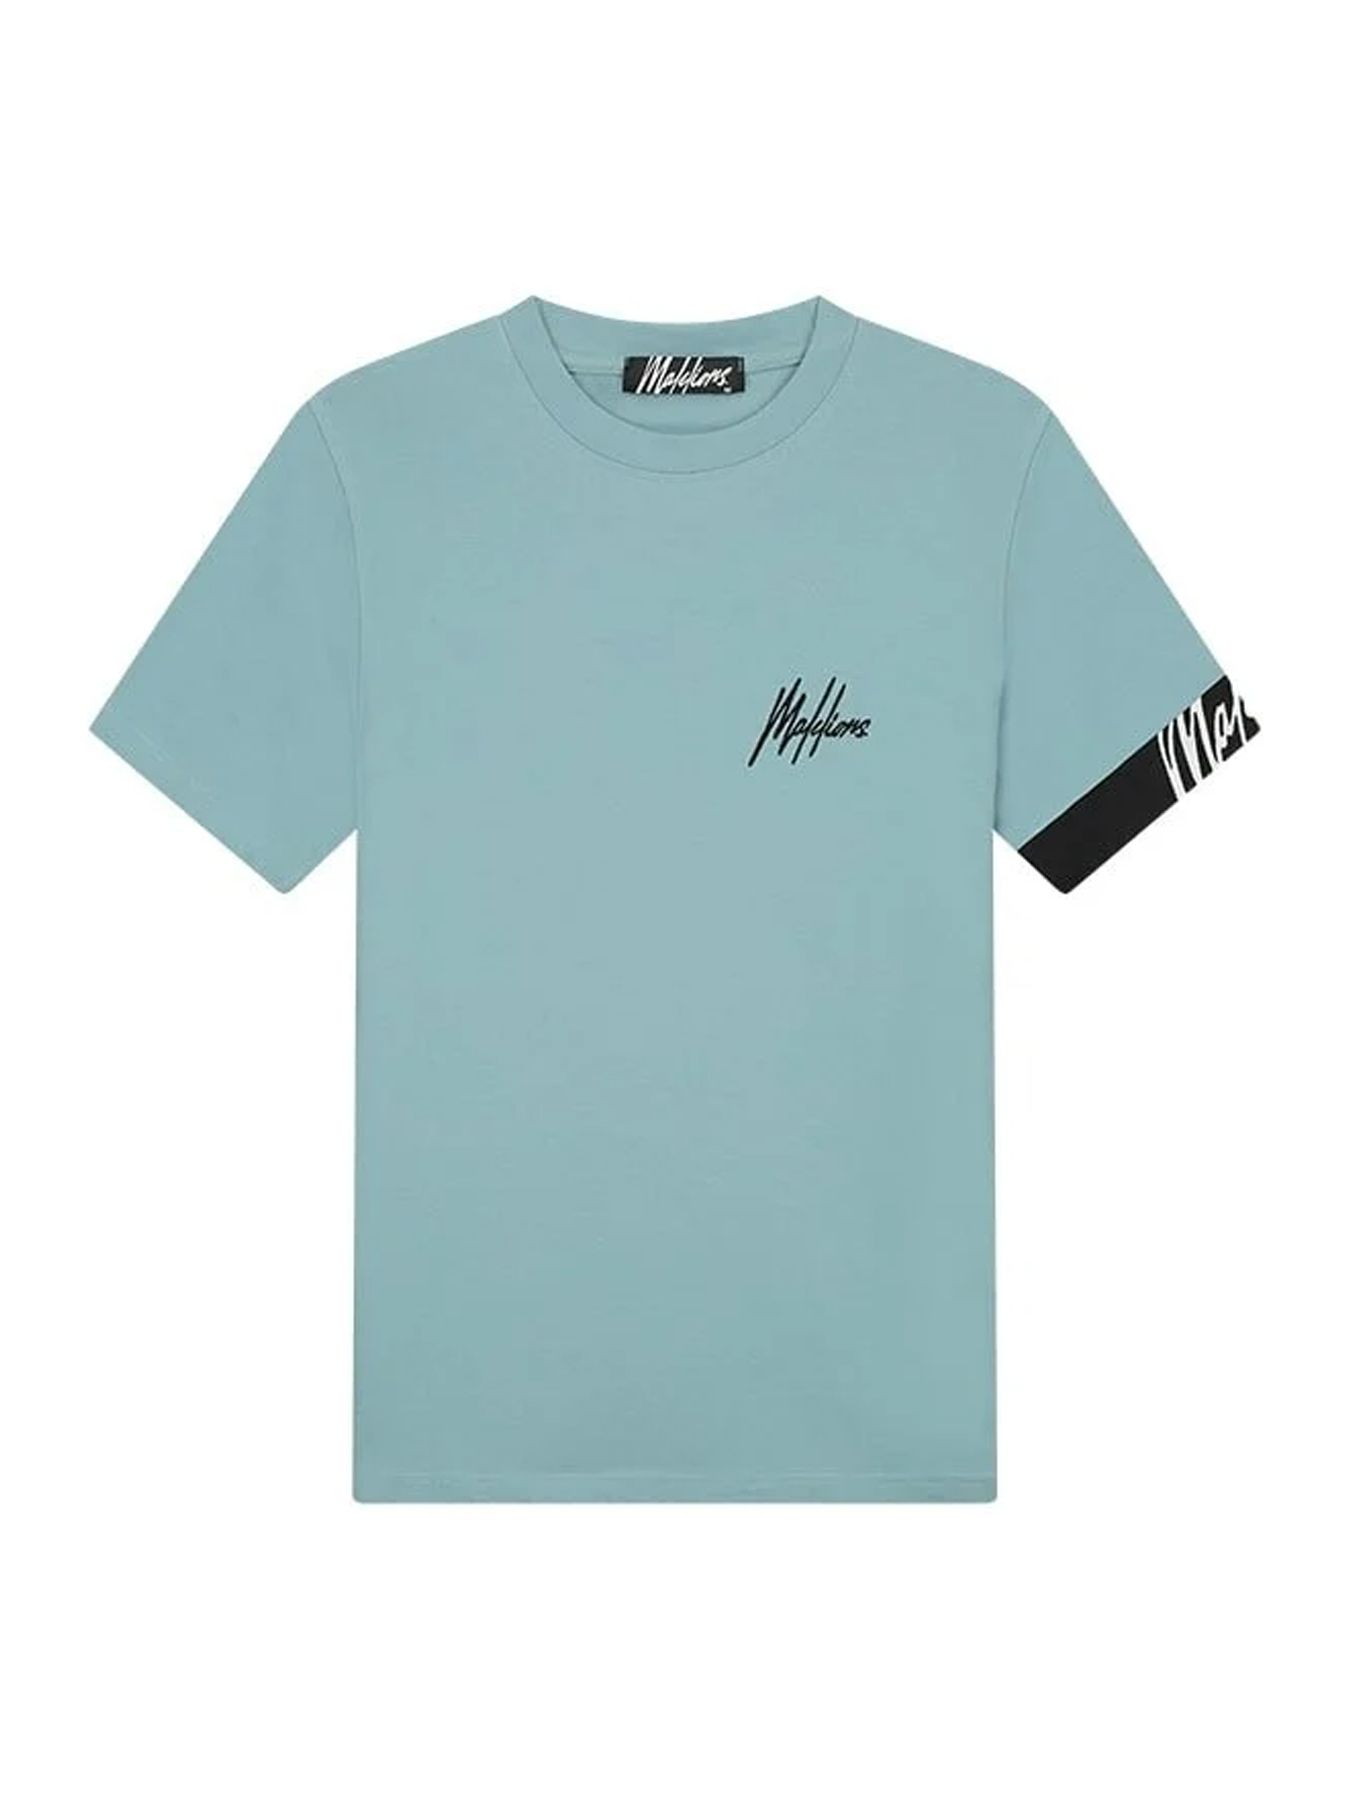 Malelions Men Captain t-shirt 2.0 light blue/black 2900147819085